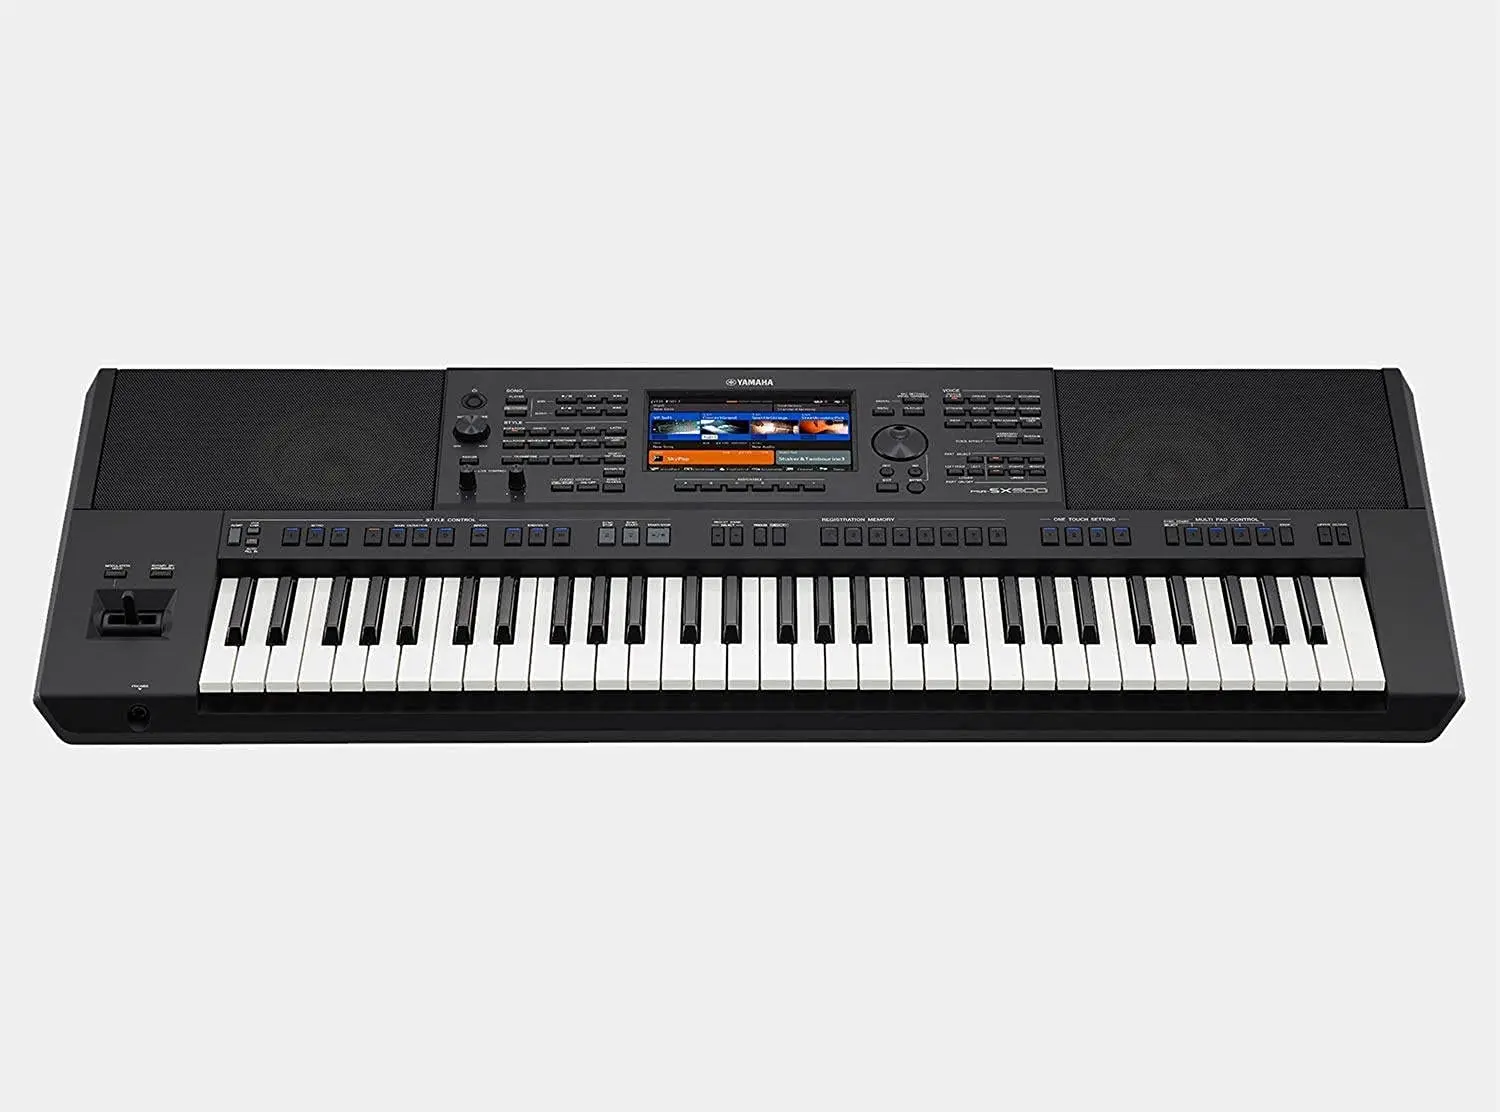 (НОВЫЙ бренд) Набор клавиатур PSR SX900 S975 SX700 S970 Deluxe keyboards0